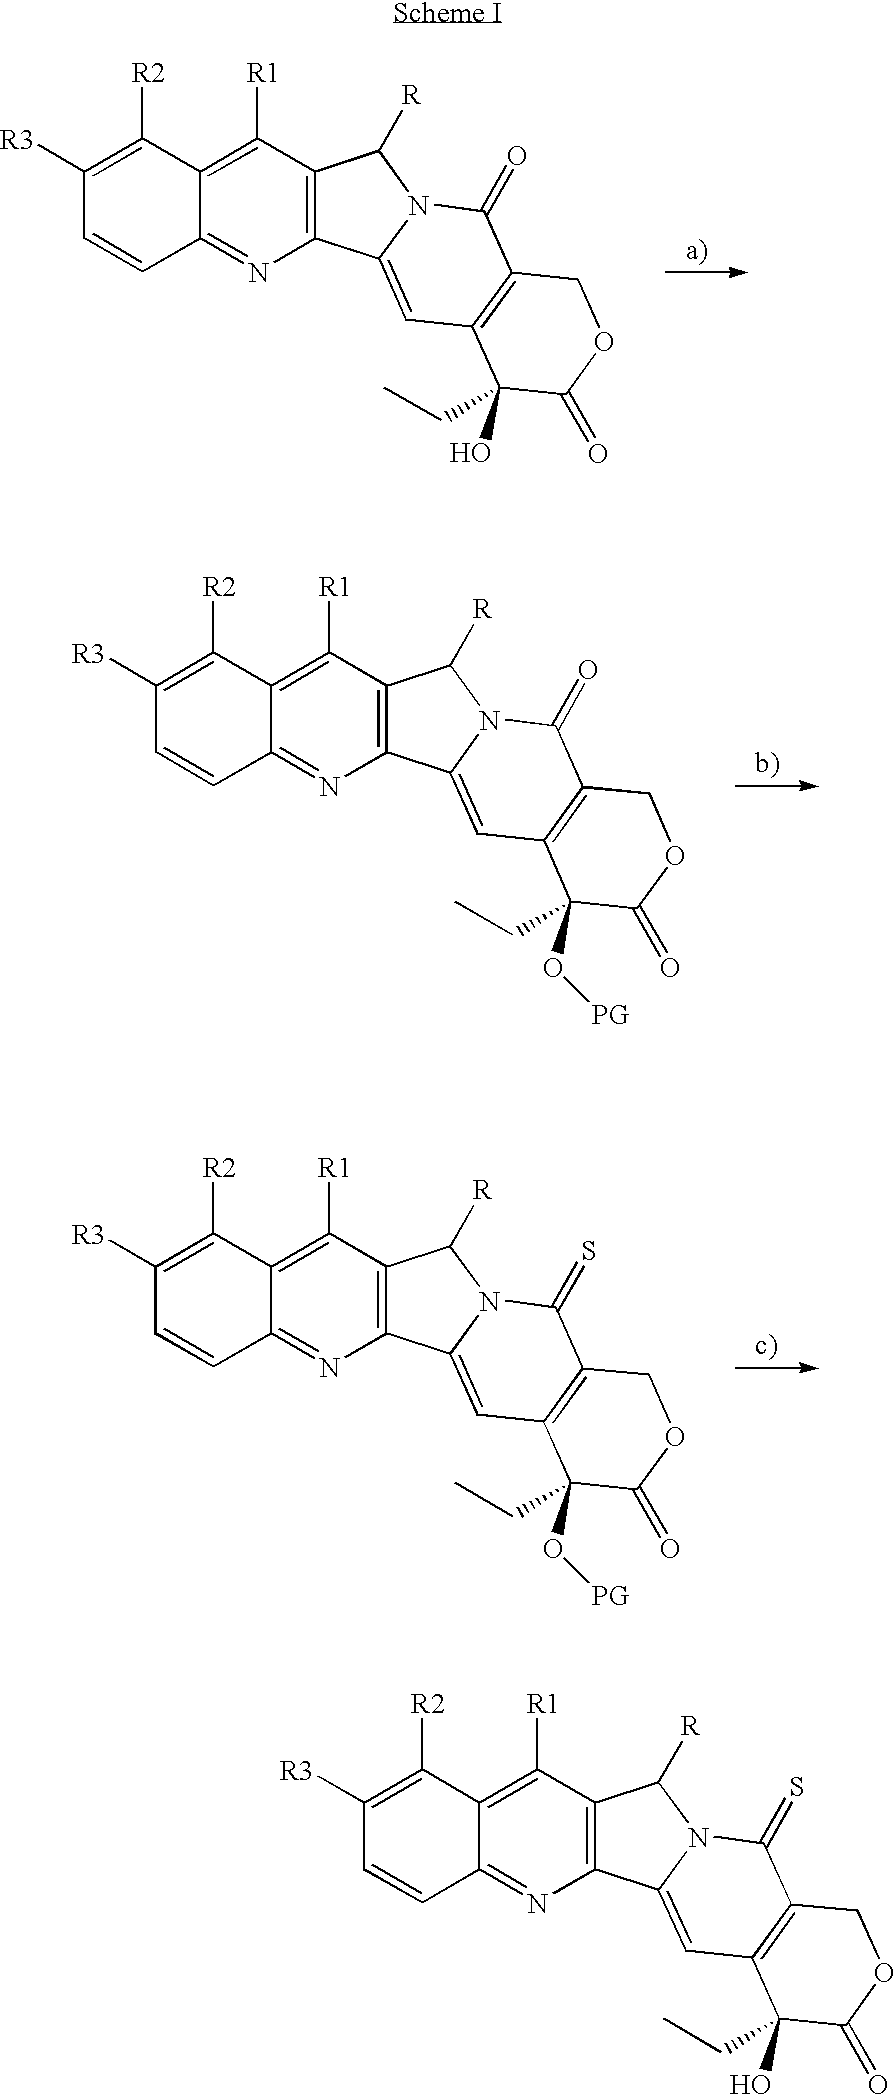 Camptothecin derivatives with antitumor activity